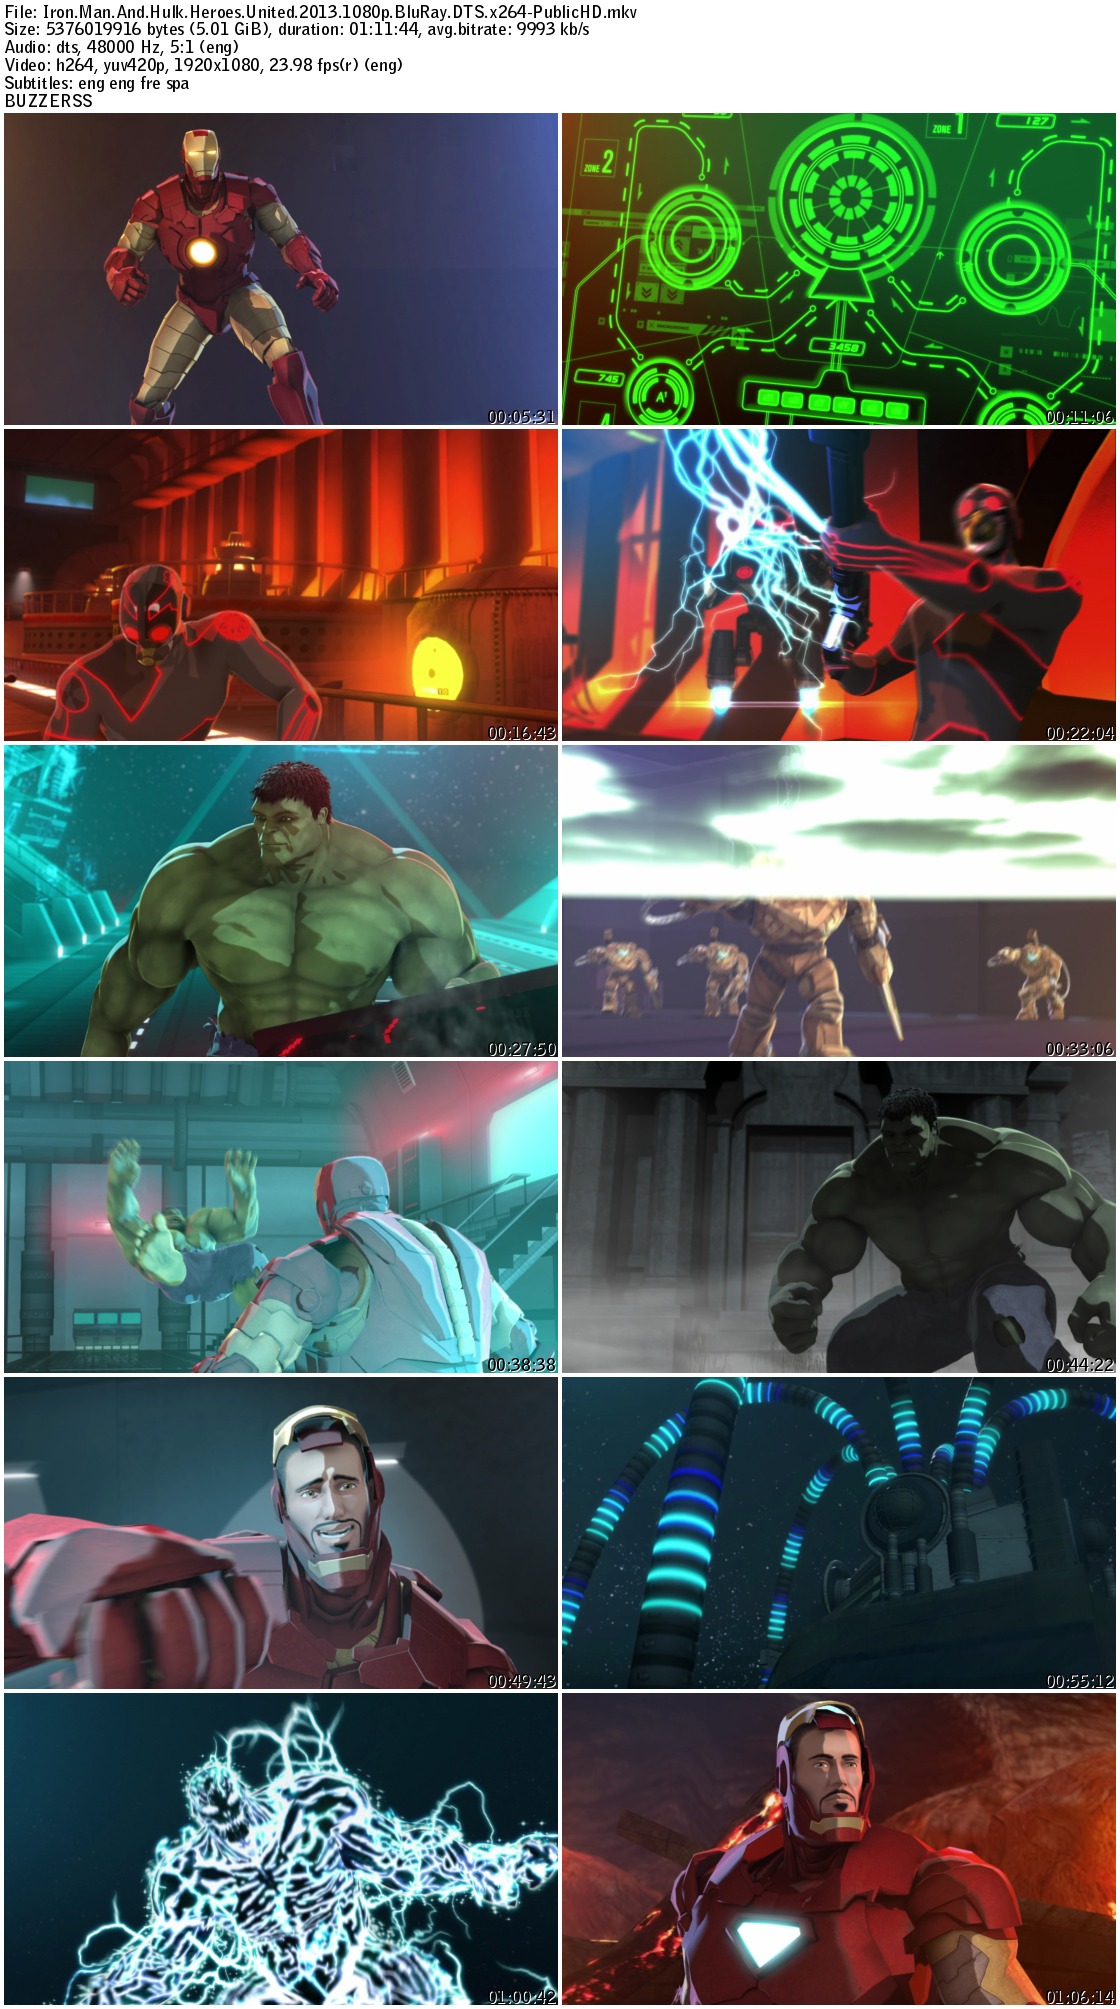 Iron Man & Hulk: Heroes United #8